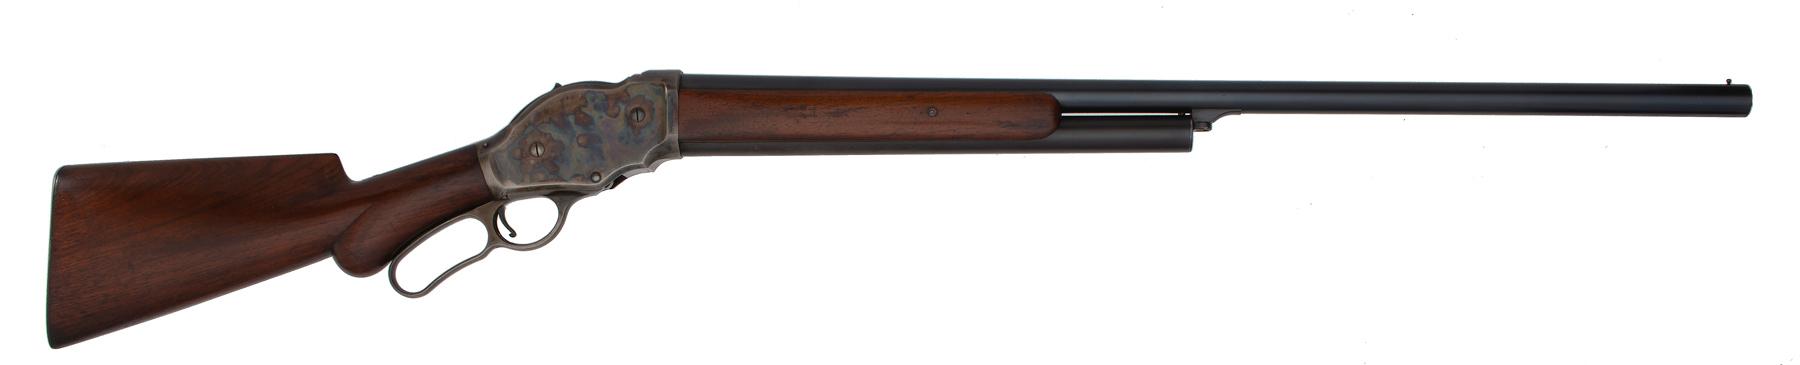 Winchester Model 1887 Shotgun